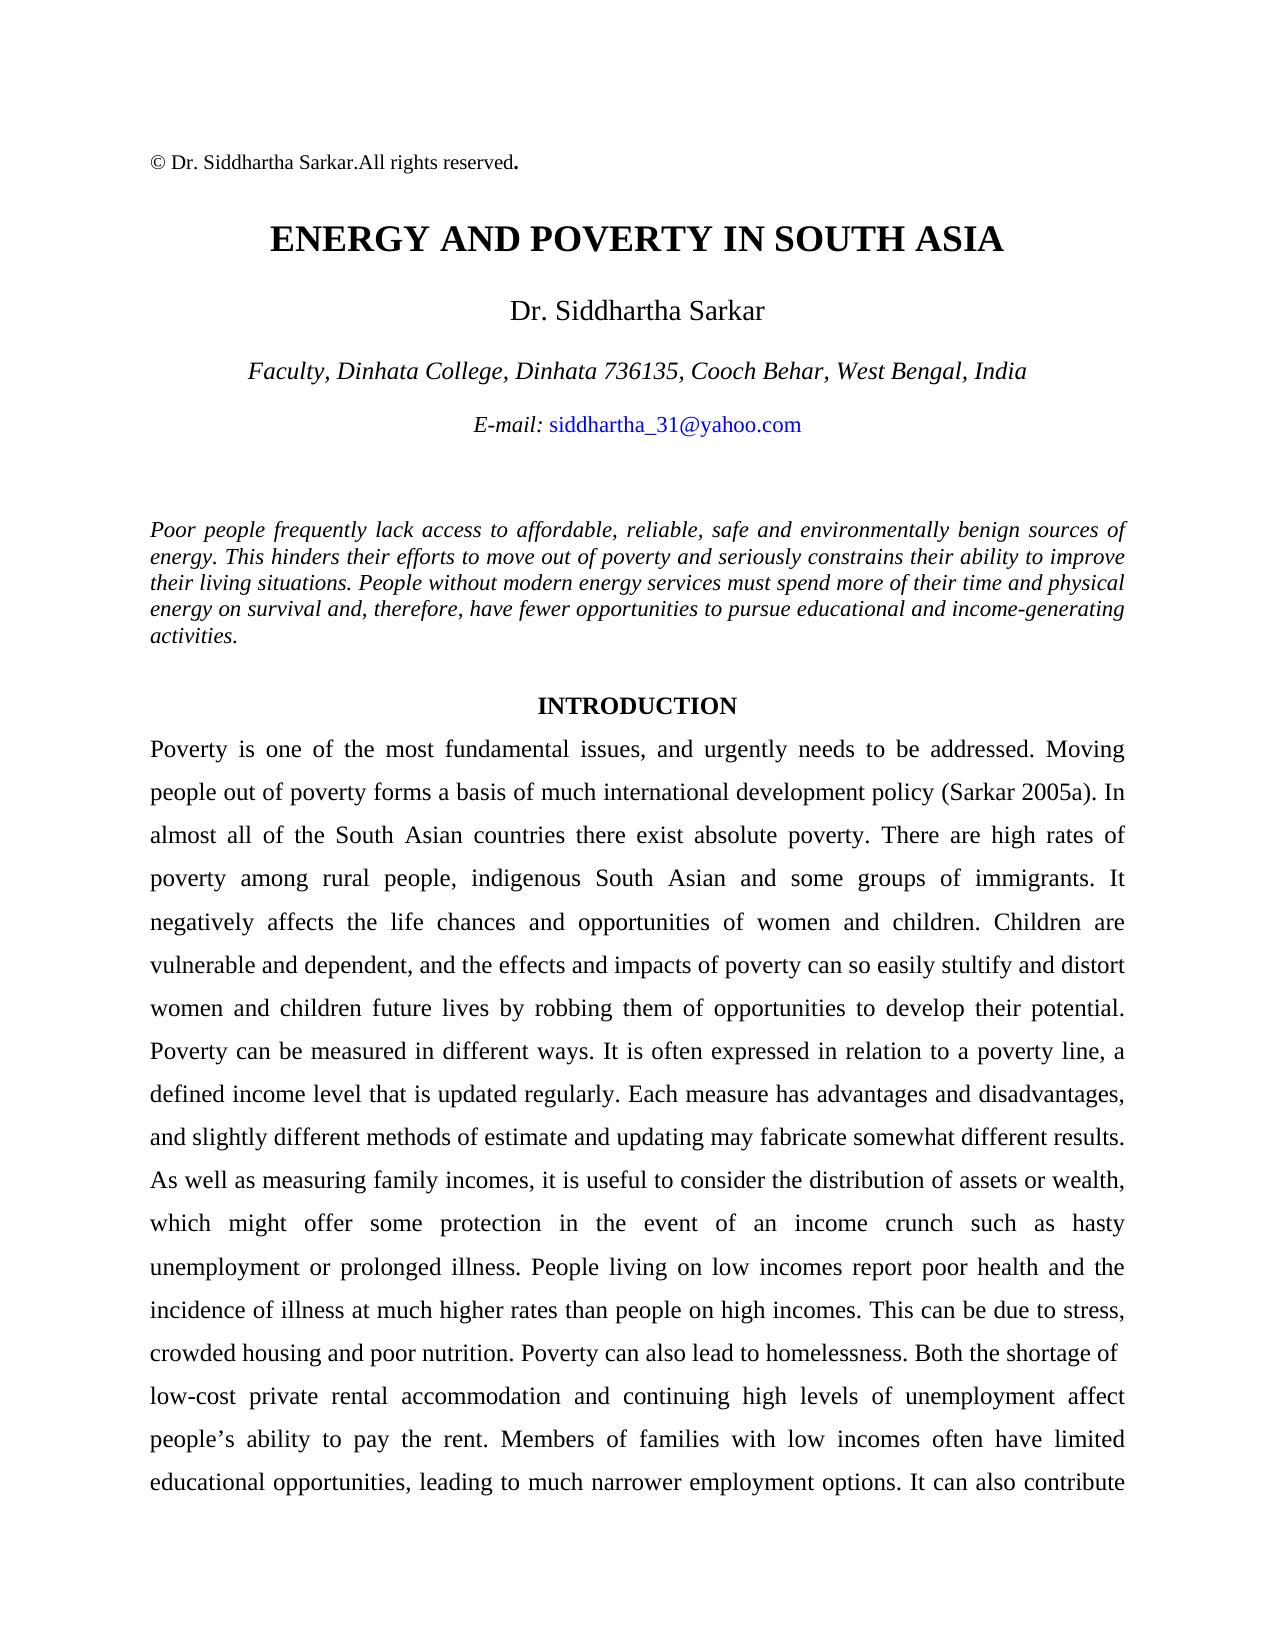 Microsoft Word - Energy and Poverty